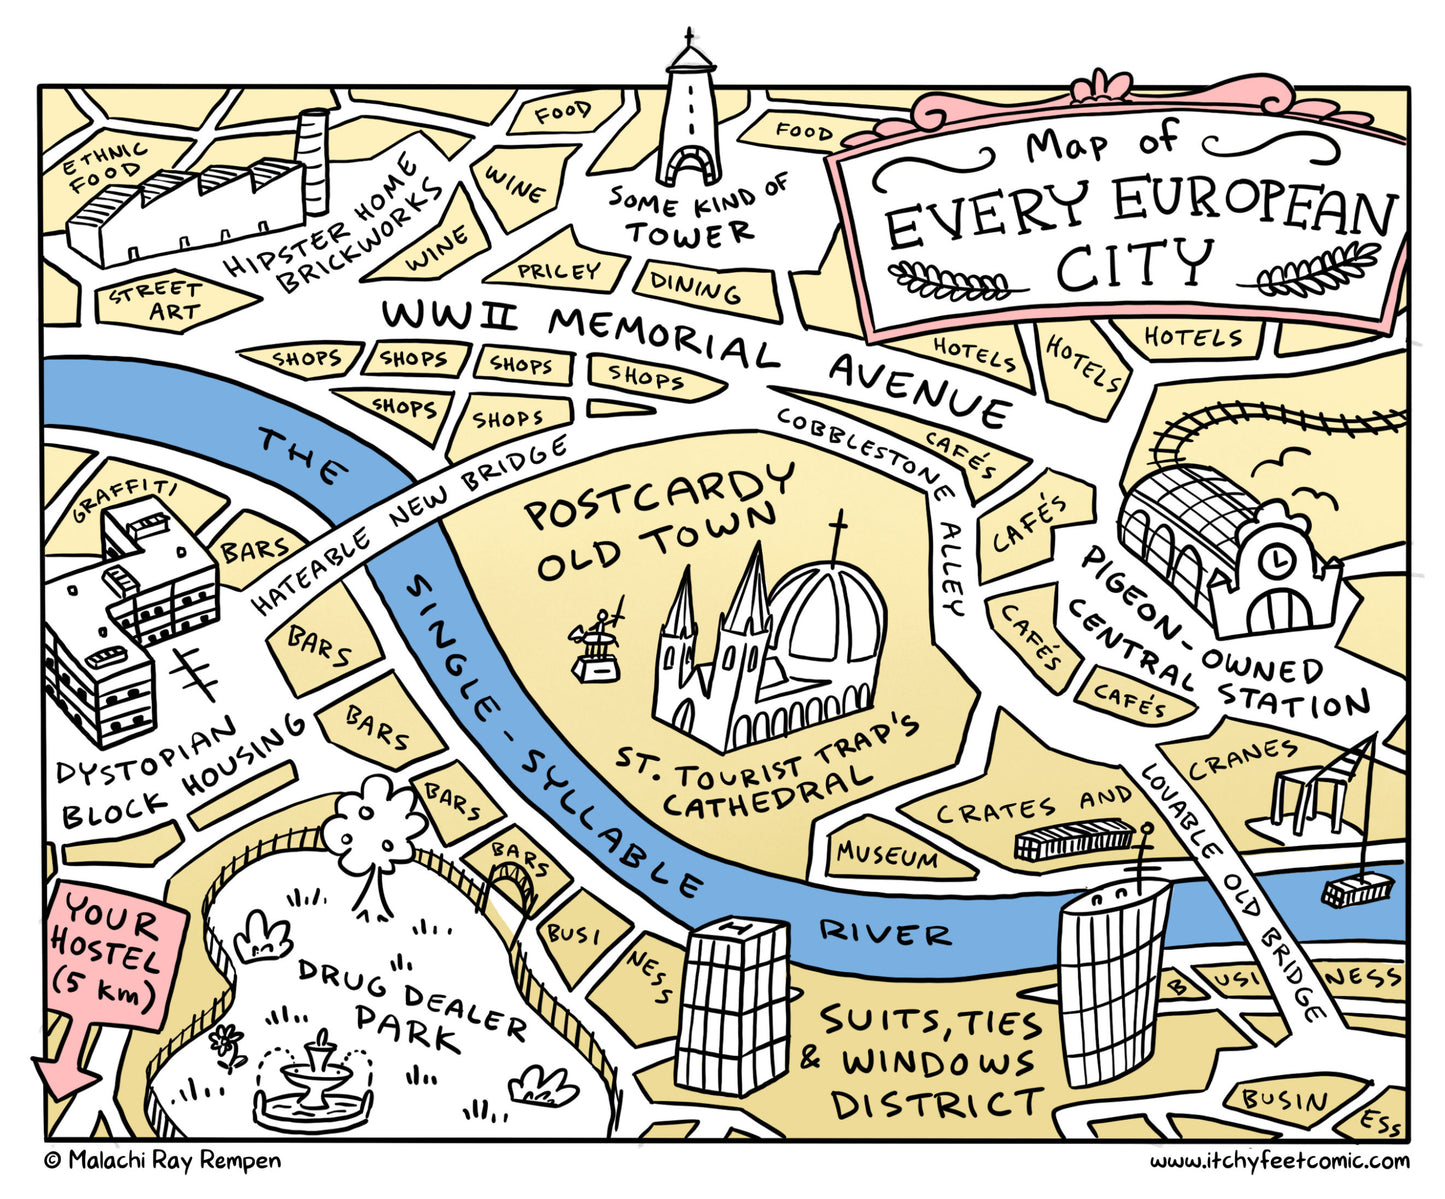 Postcard of Every European City